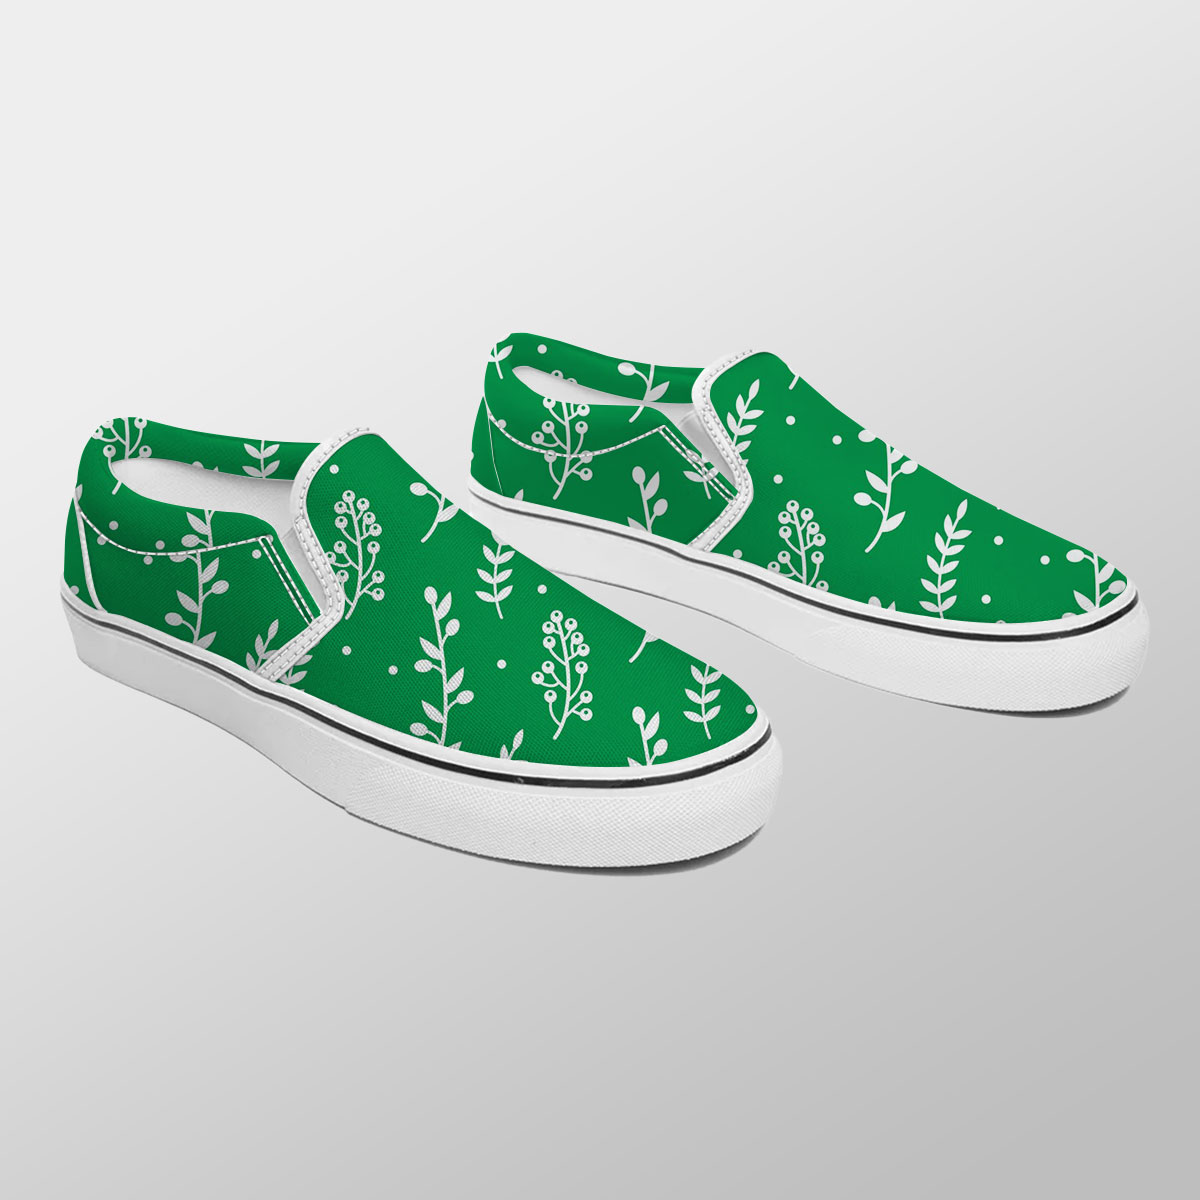 Christmas Mistletoe And Leaf, Mistletoe Clipart On Green Slip On Sneakers